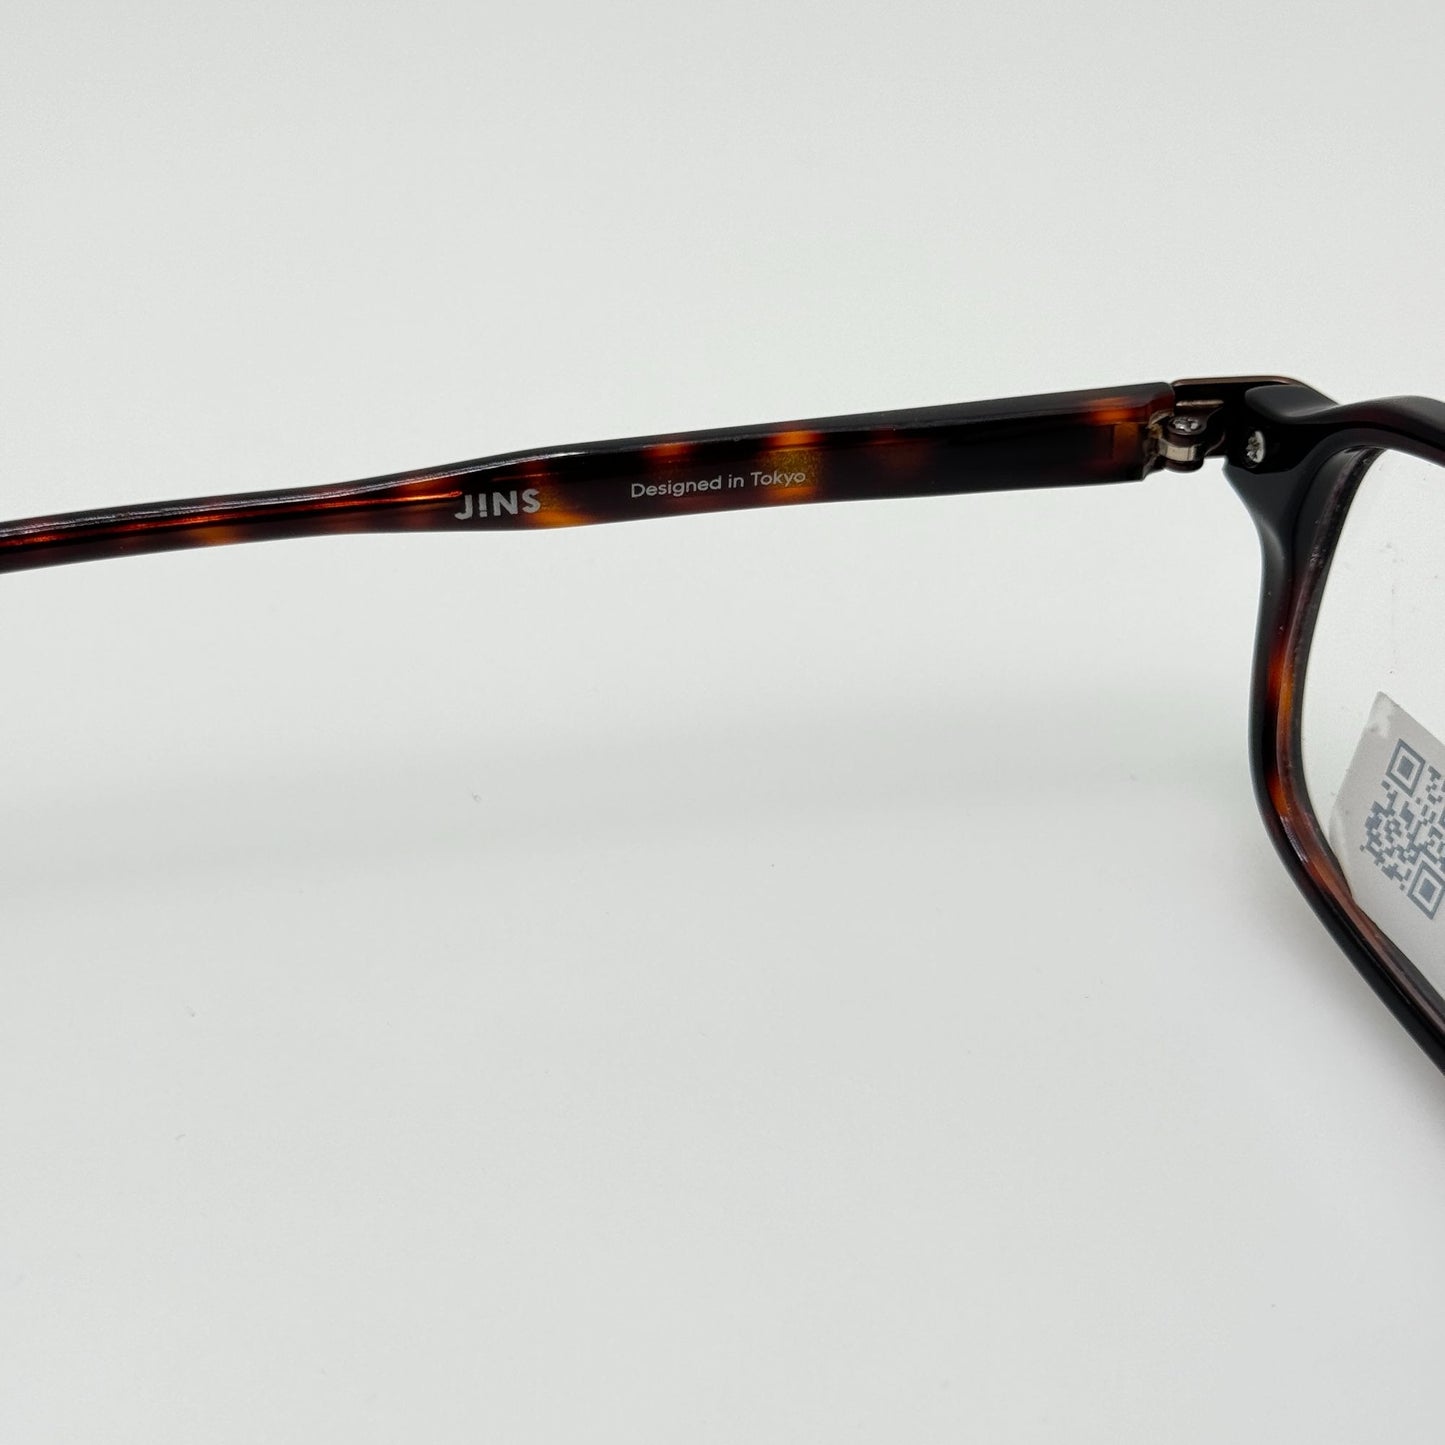 Jins Eyeglasses Eye Glasses Frames MCF-15A-U265A 86 51-18-150 34